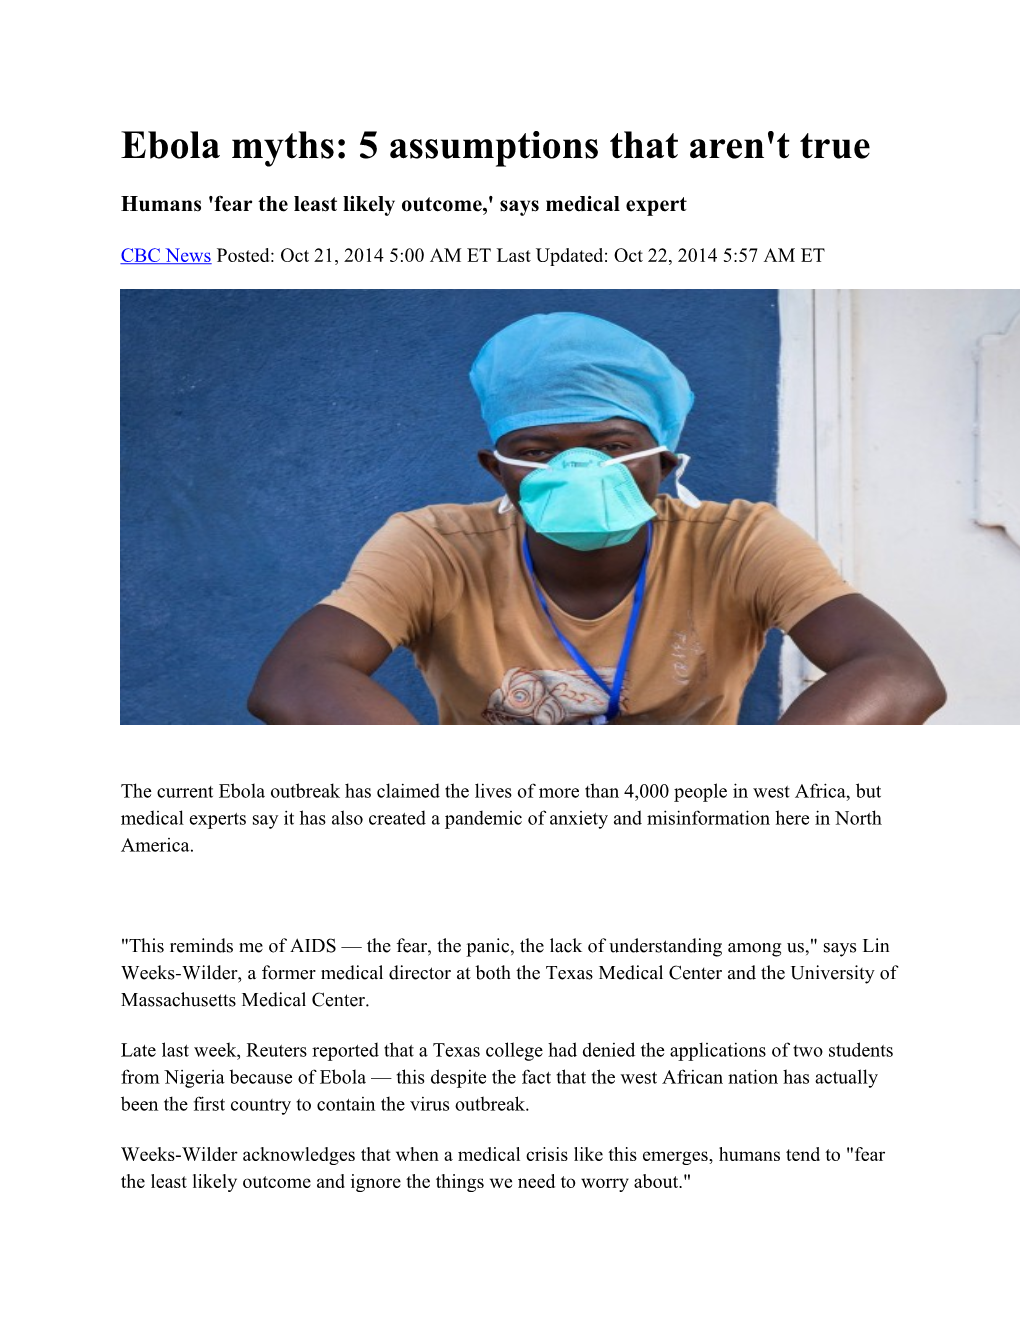 Ebola Myths: 5 Assumptions That Aren't True